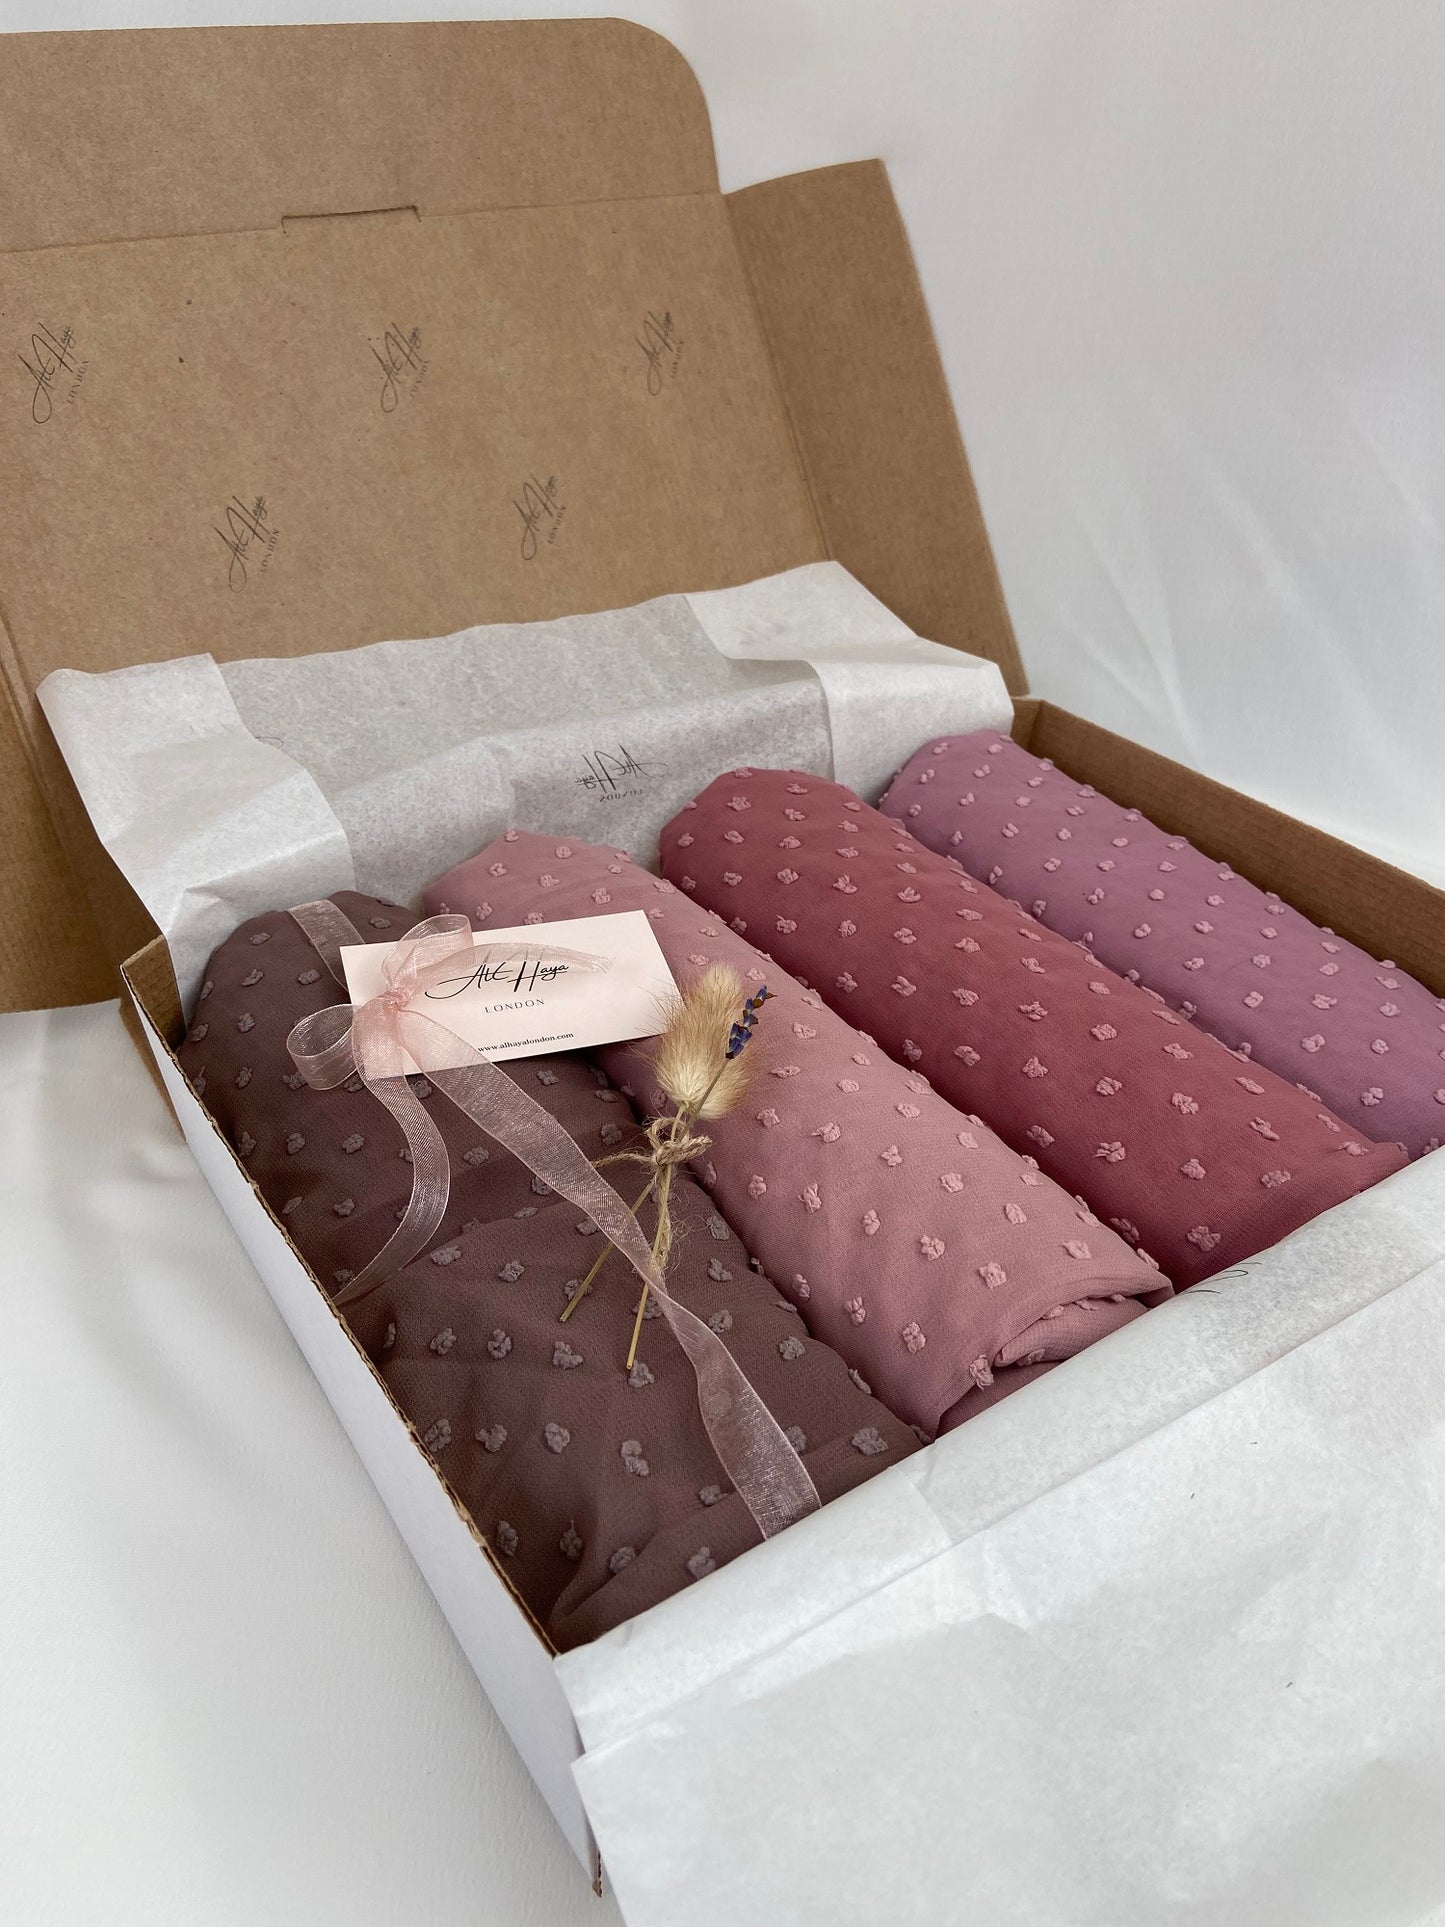 Neutral Pinks Hijab Gift Box